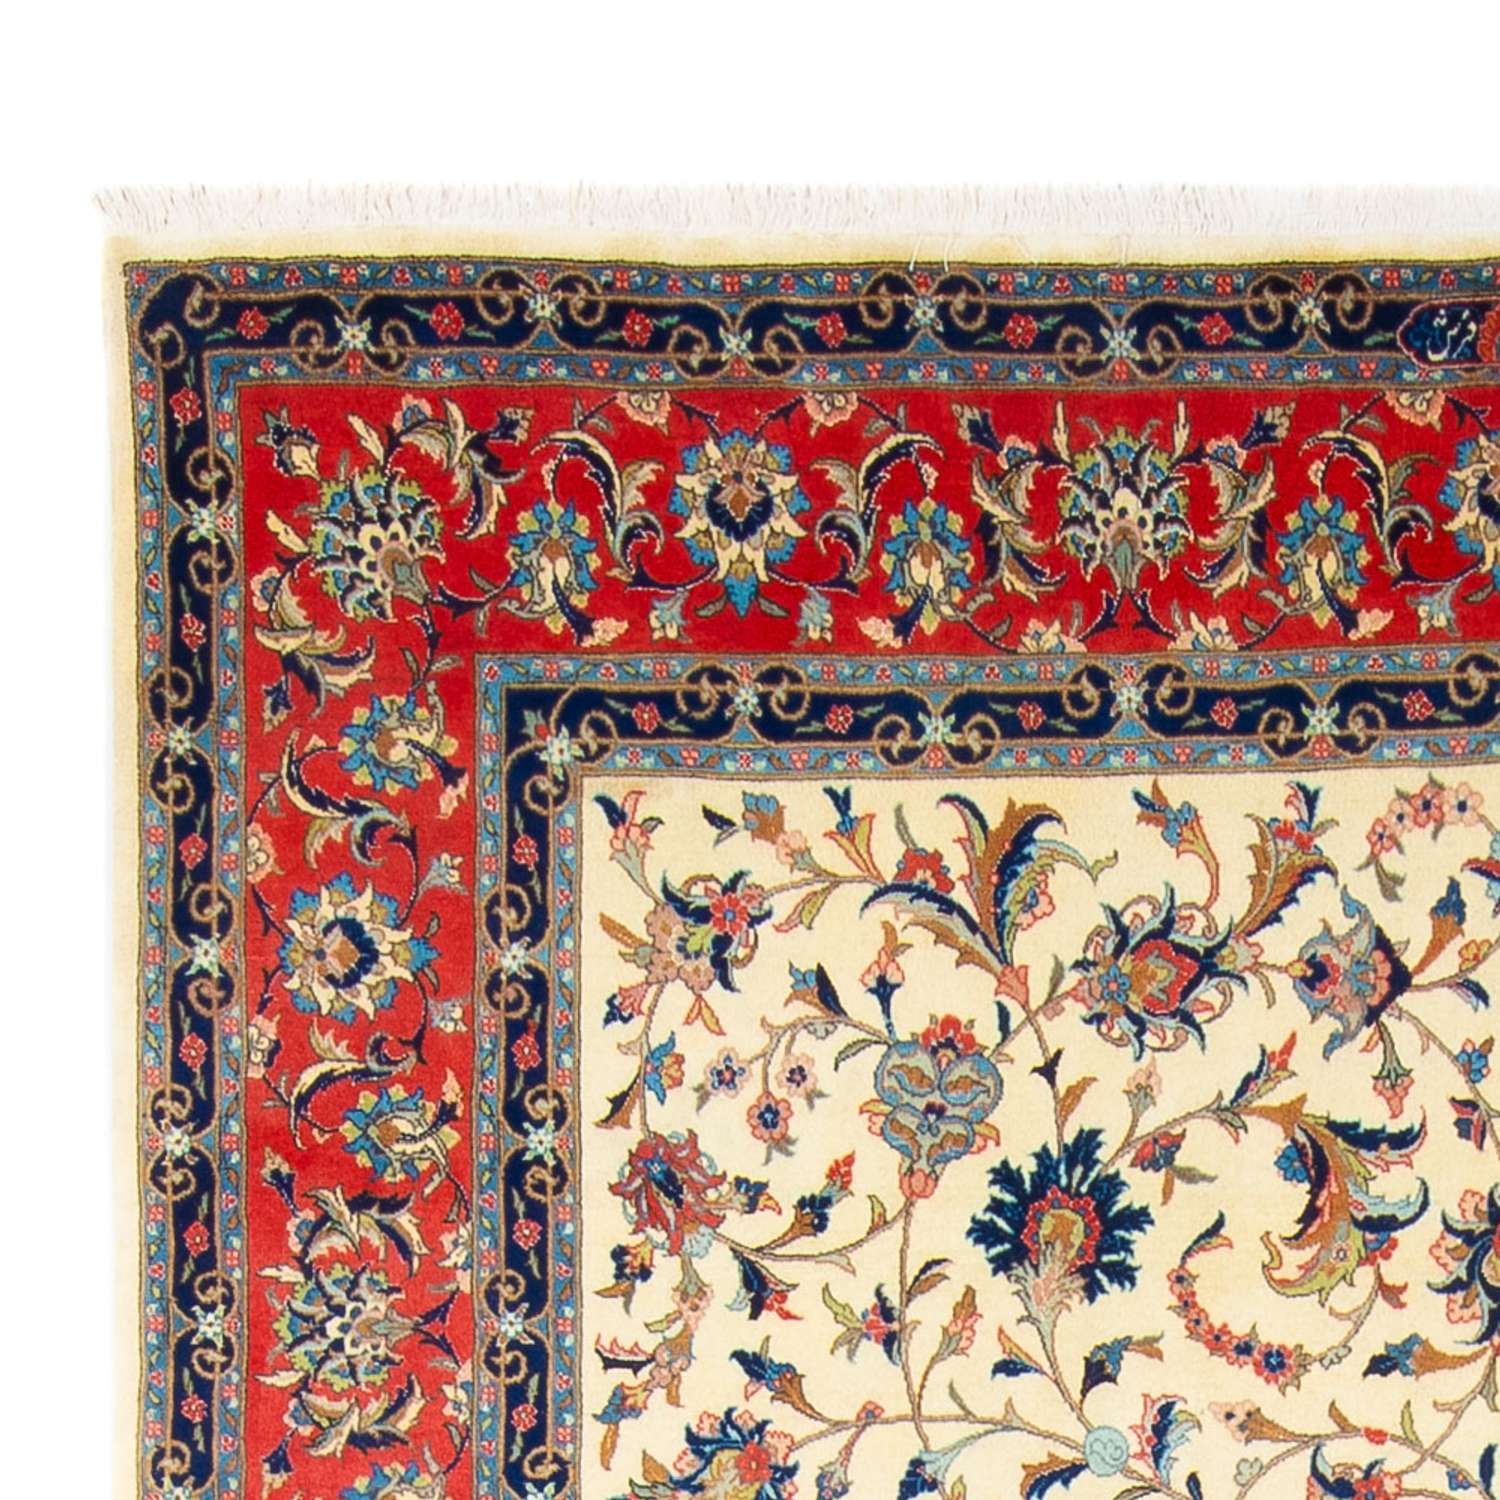 Persisk matta - Classic - 340 x 225 cm - grädde